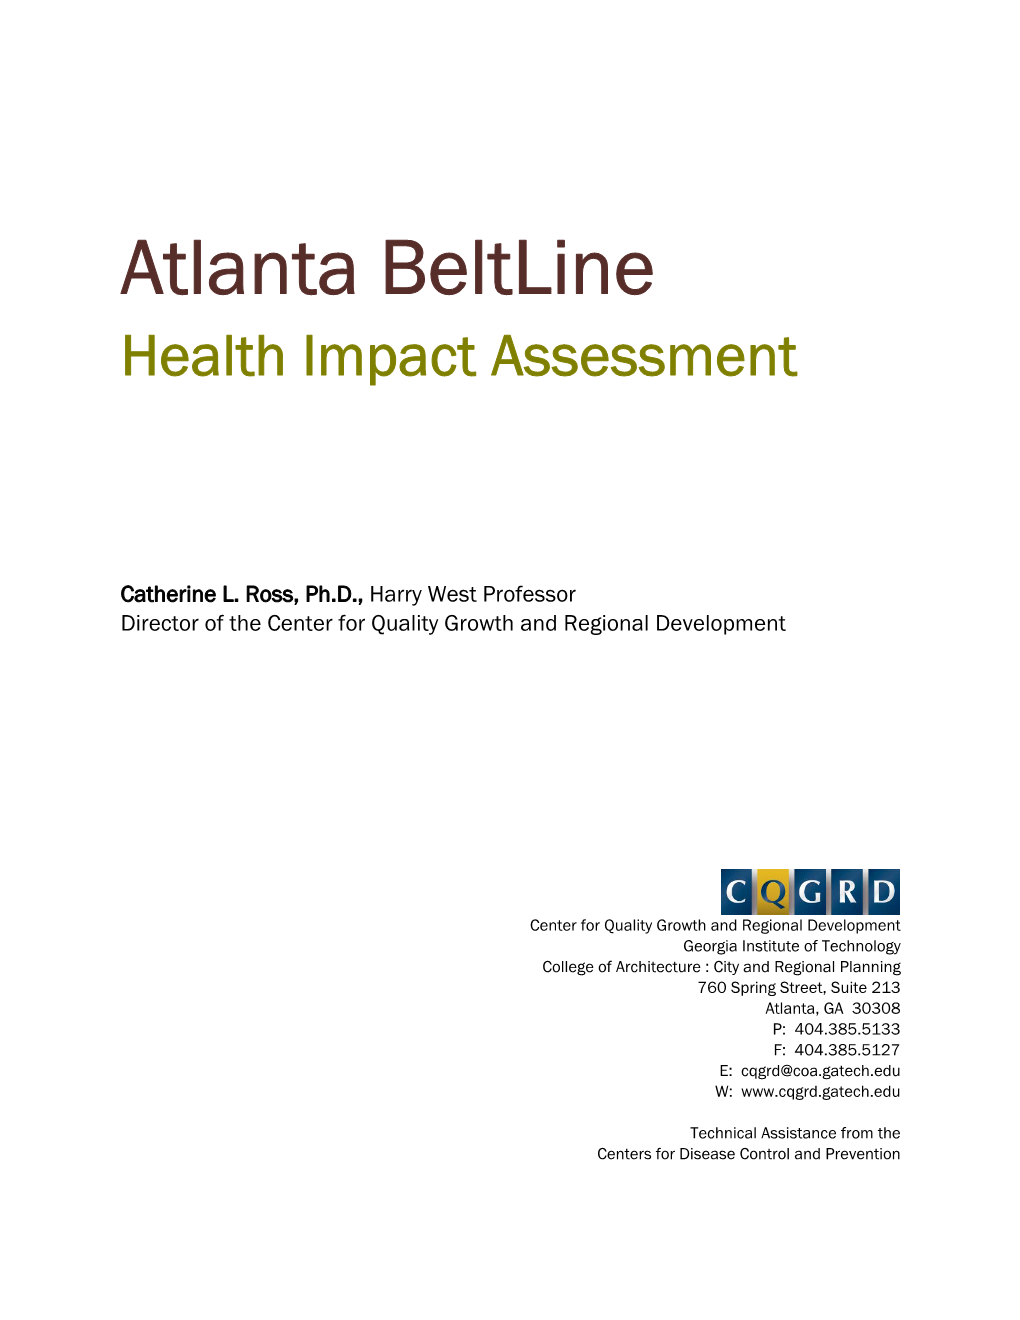 Atlanta Beltline Health Impact Assessment